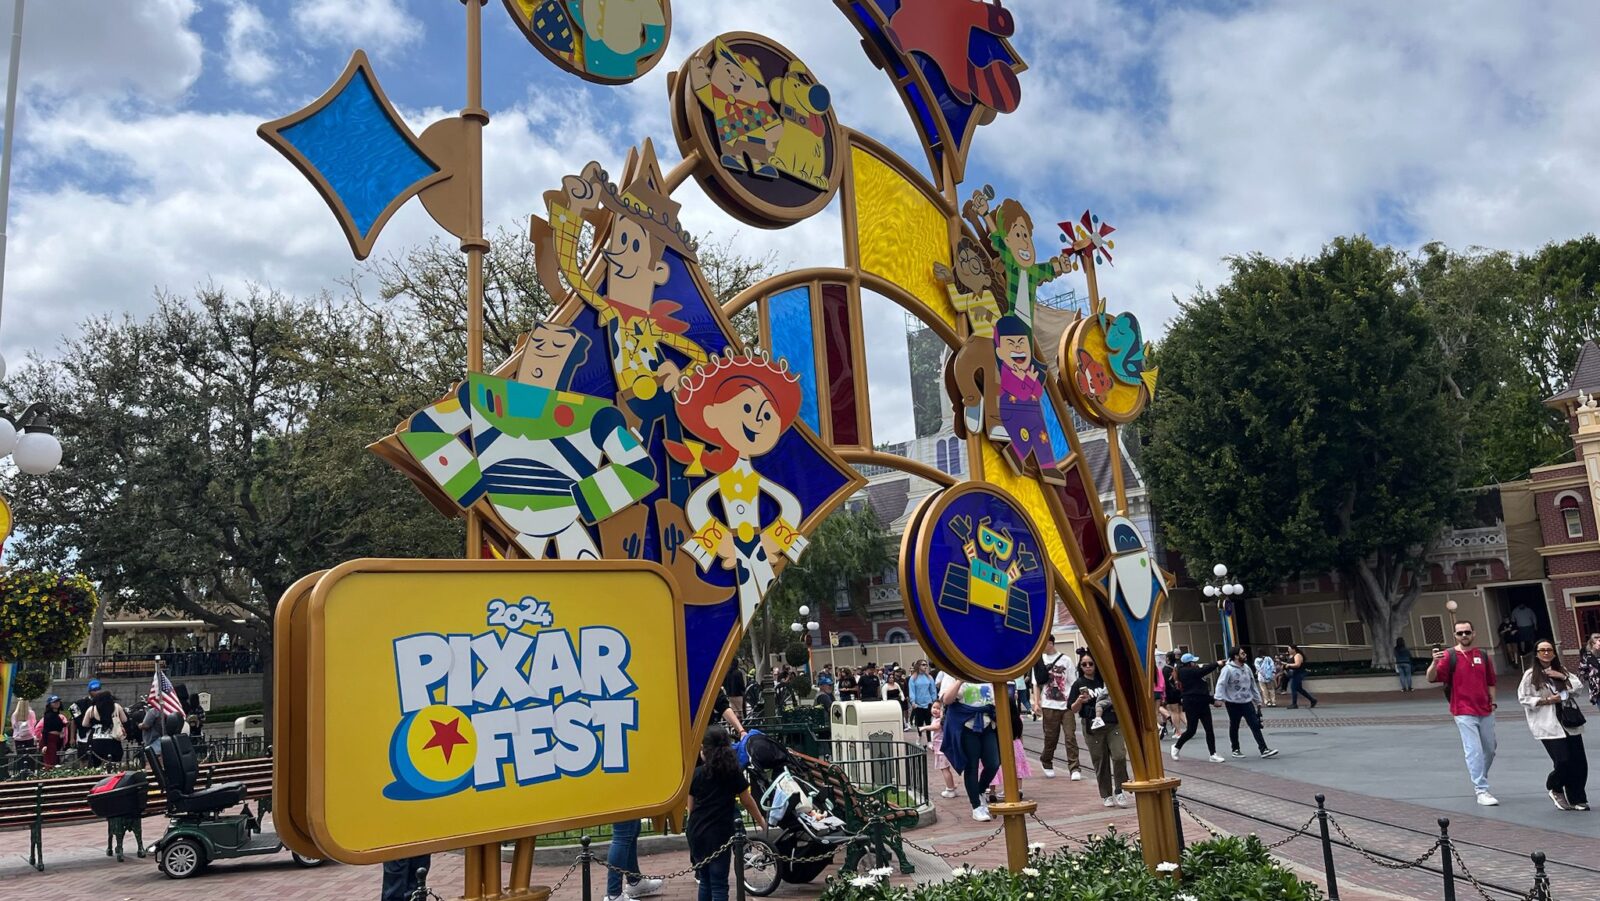 Pixar Fest sign at DIsneyland